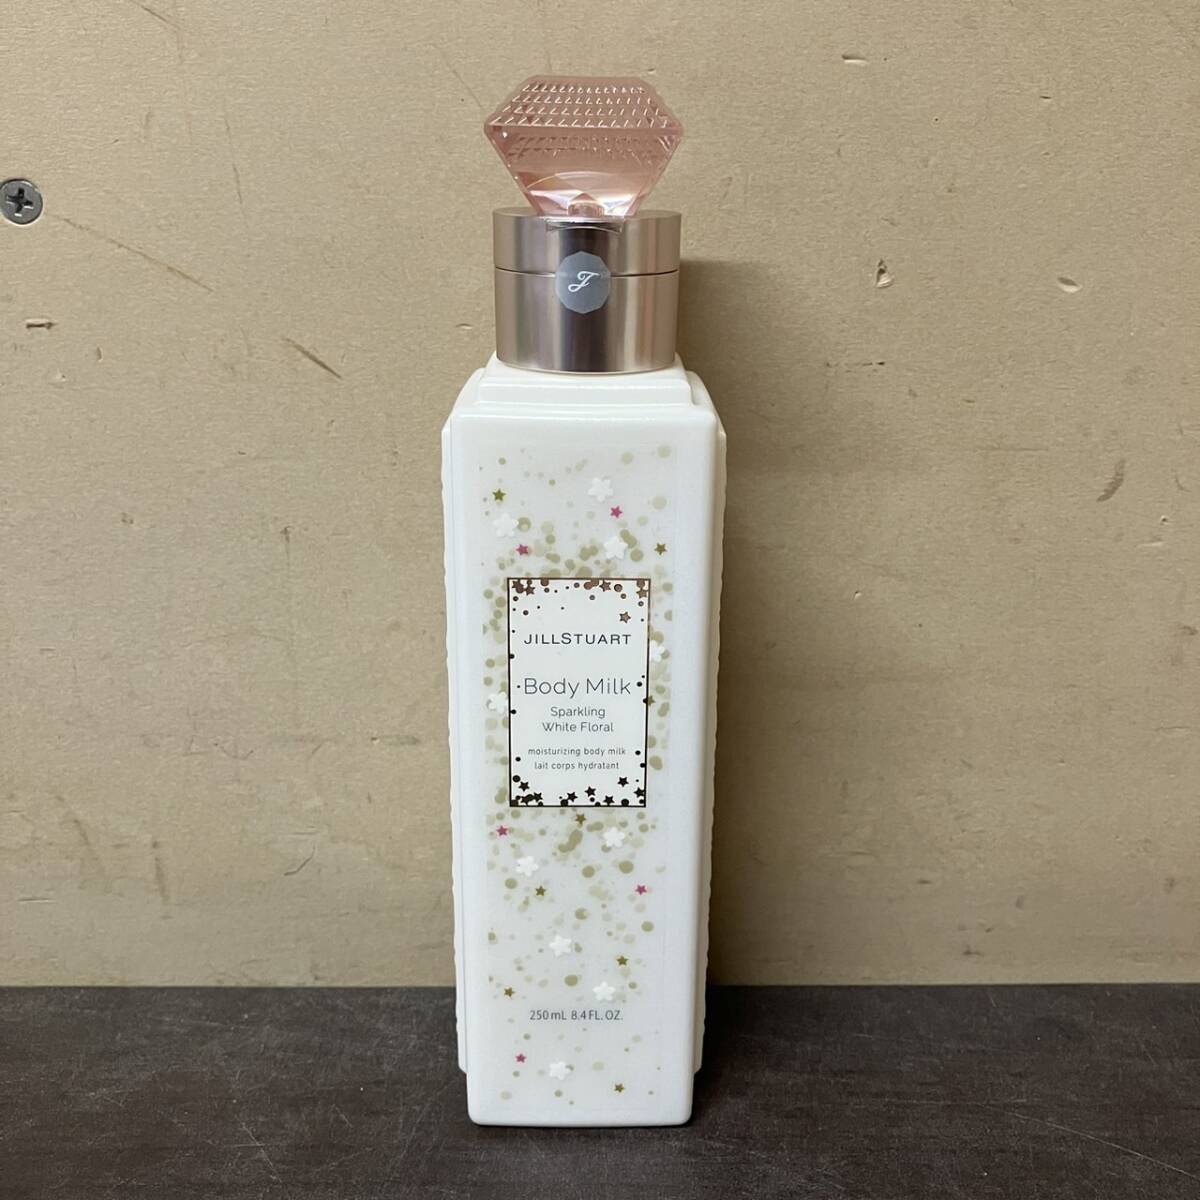 [5-9]JILLSTUART Jill Stuart body milk Sparkling white floral 250ml Jill cosme body milk 